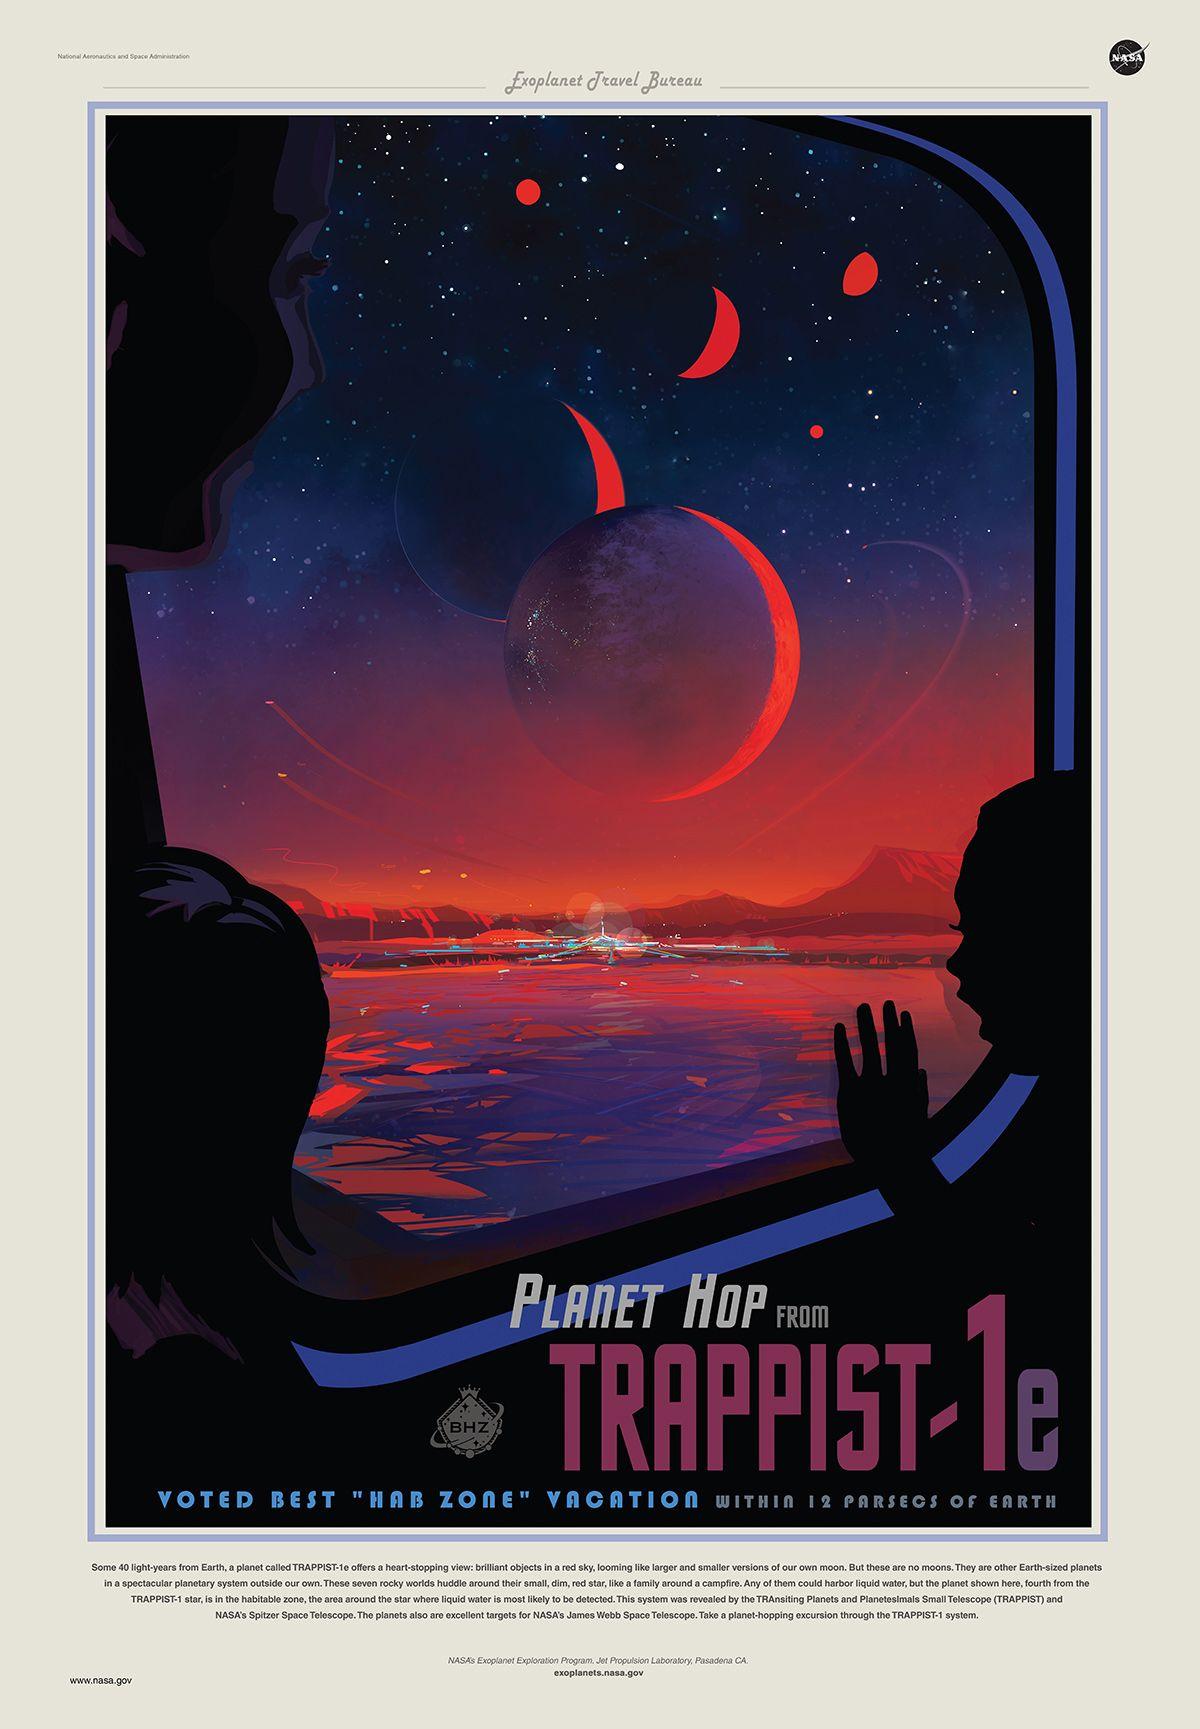 Big Printable NASA Logo - Planet hop from TRAPPIST-1e – Exoplanet Exploration: Planets Beyond ...